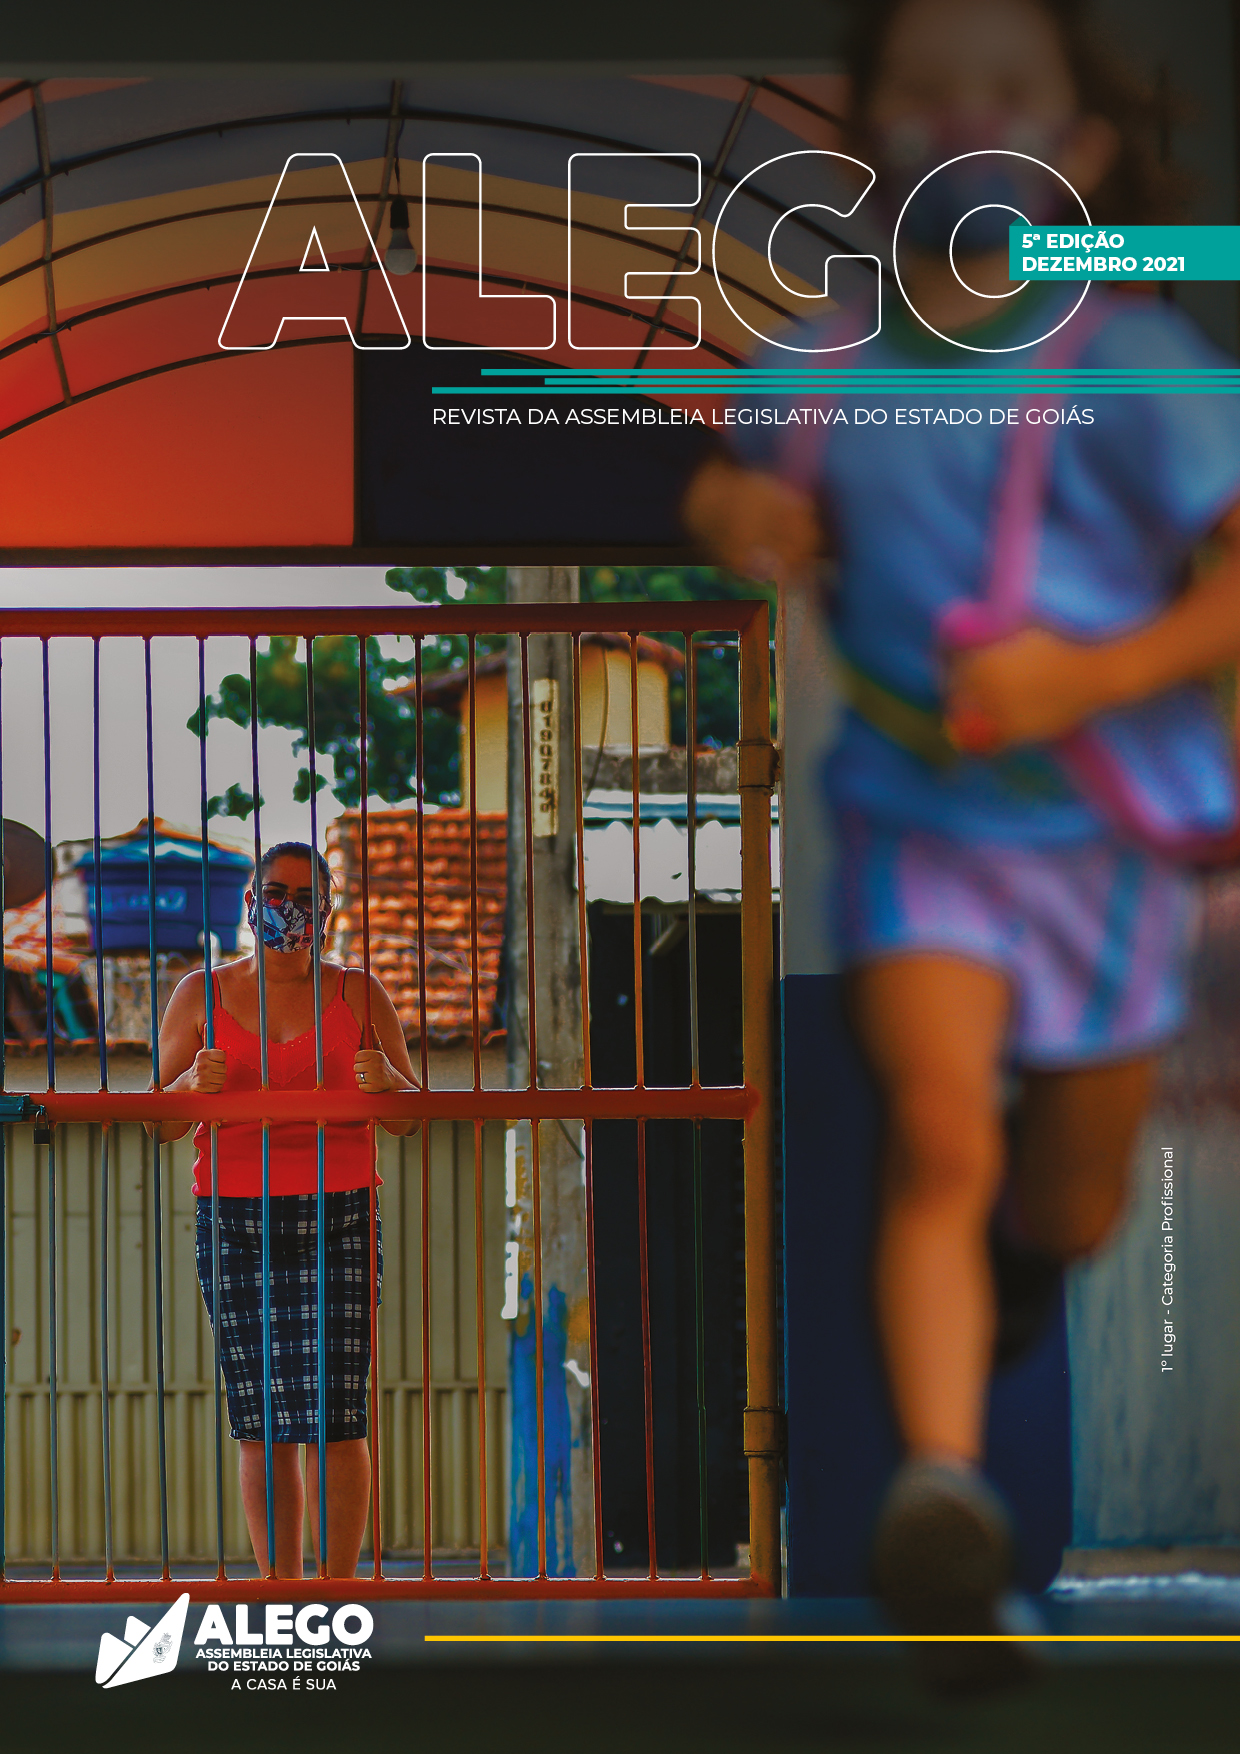 Capa da Revista Alego n.º 5/2021